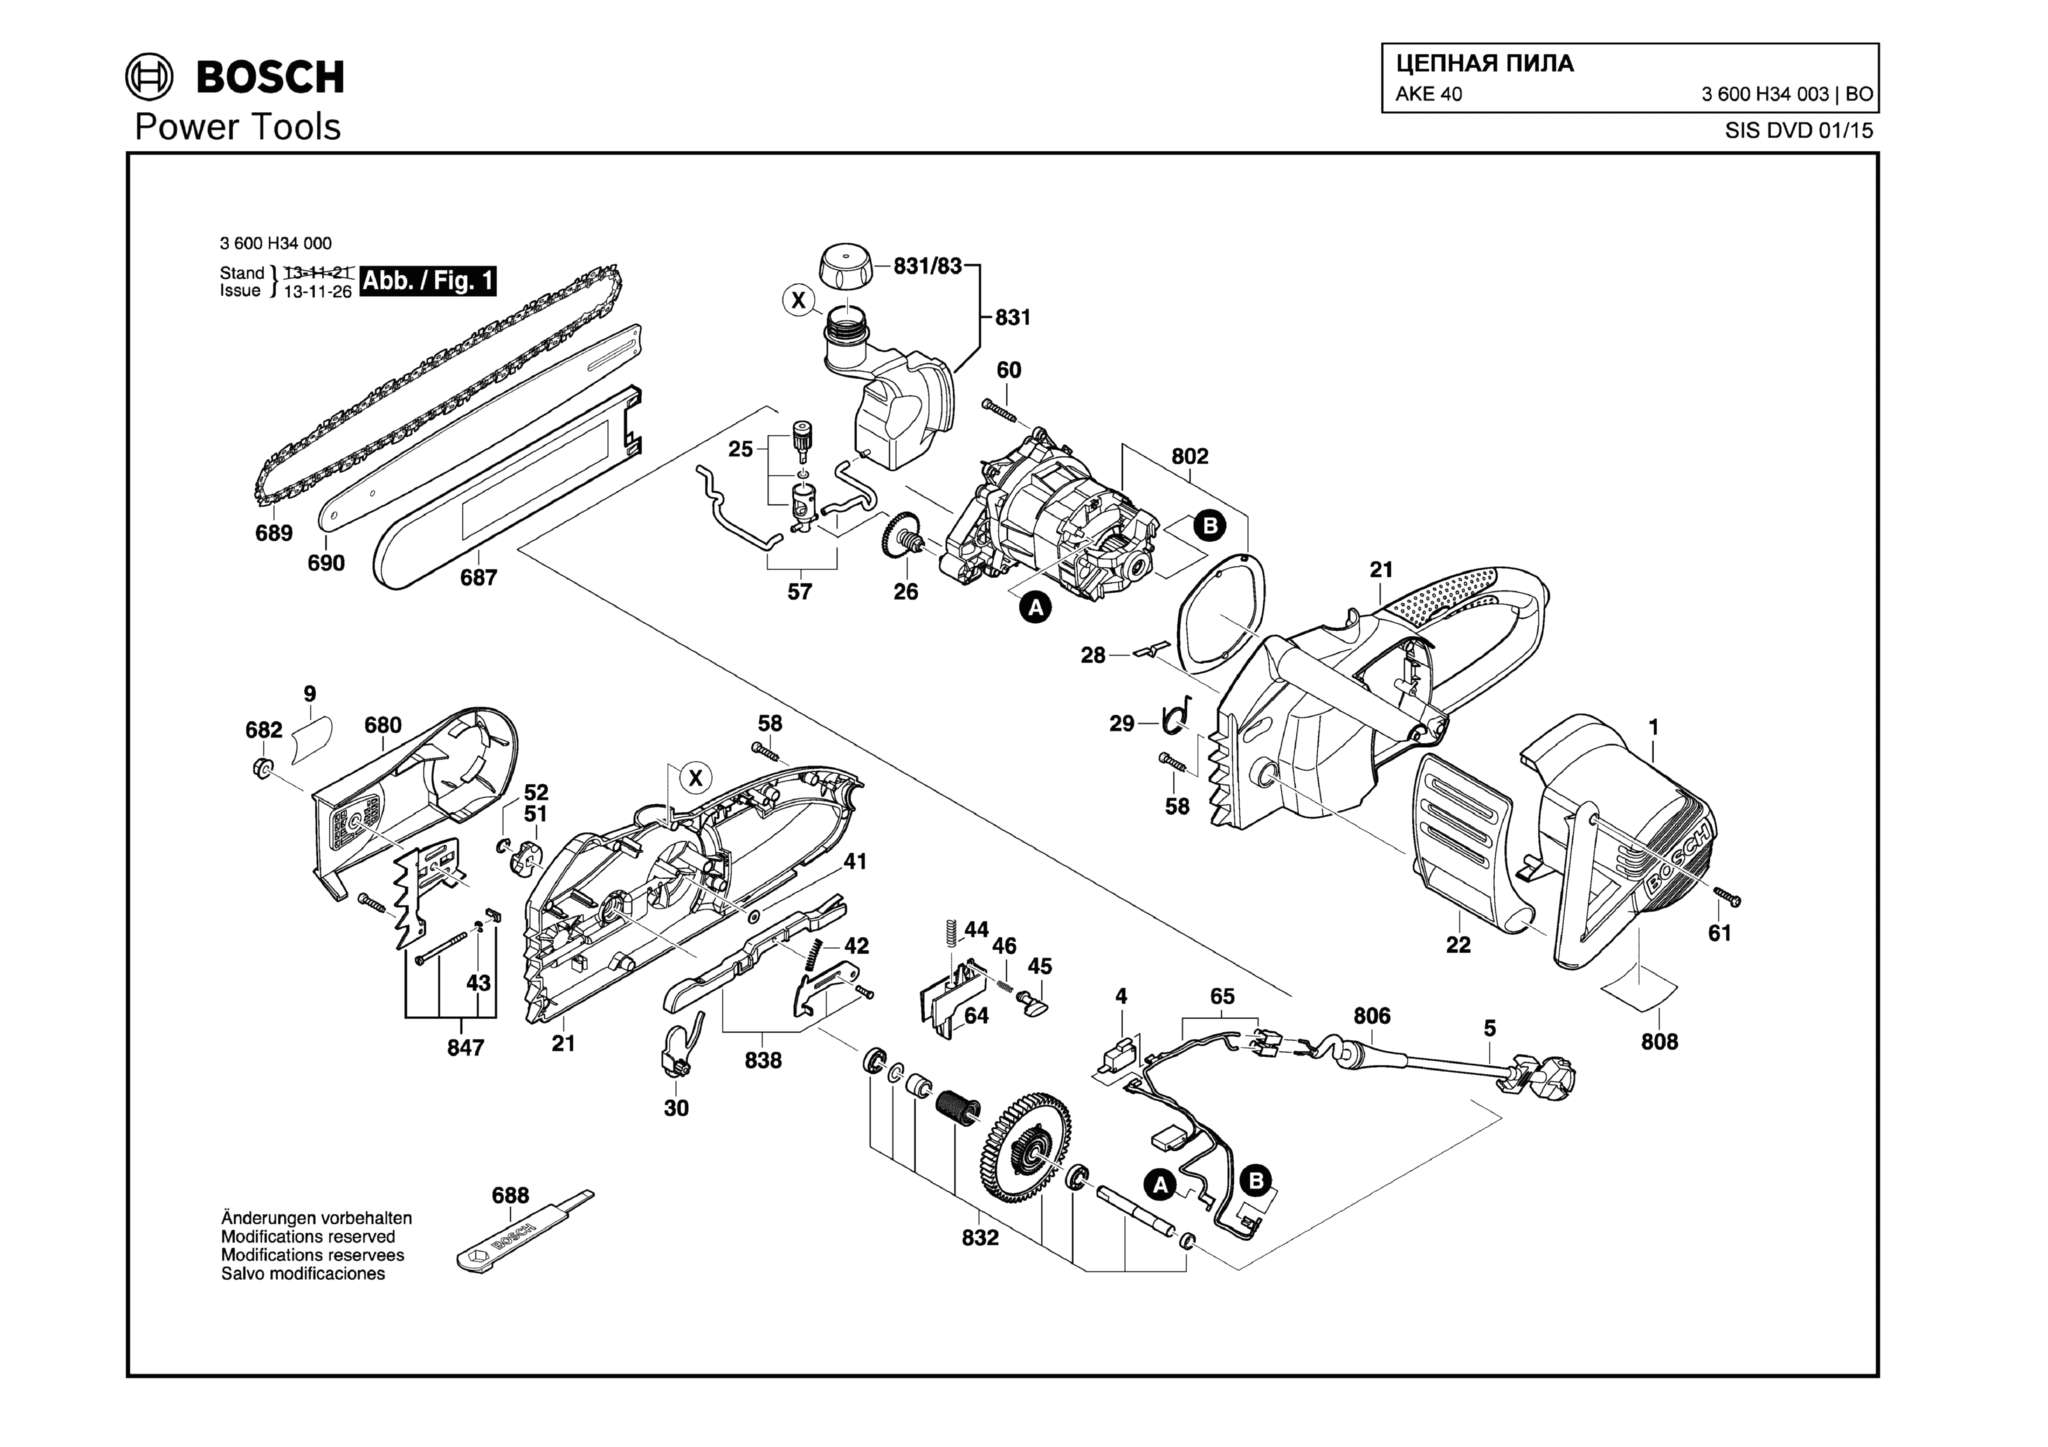 Запчасти, схема и деталировка Bosch AKE 40 (ТИП 3600H34003)